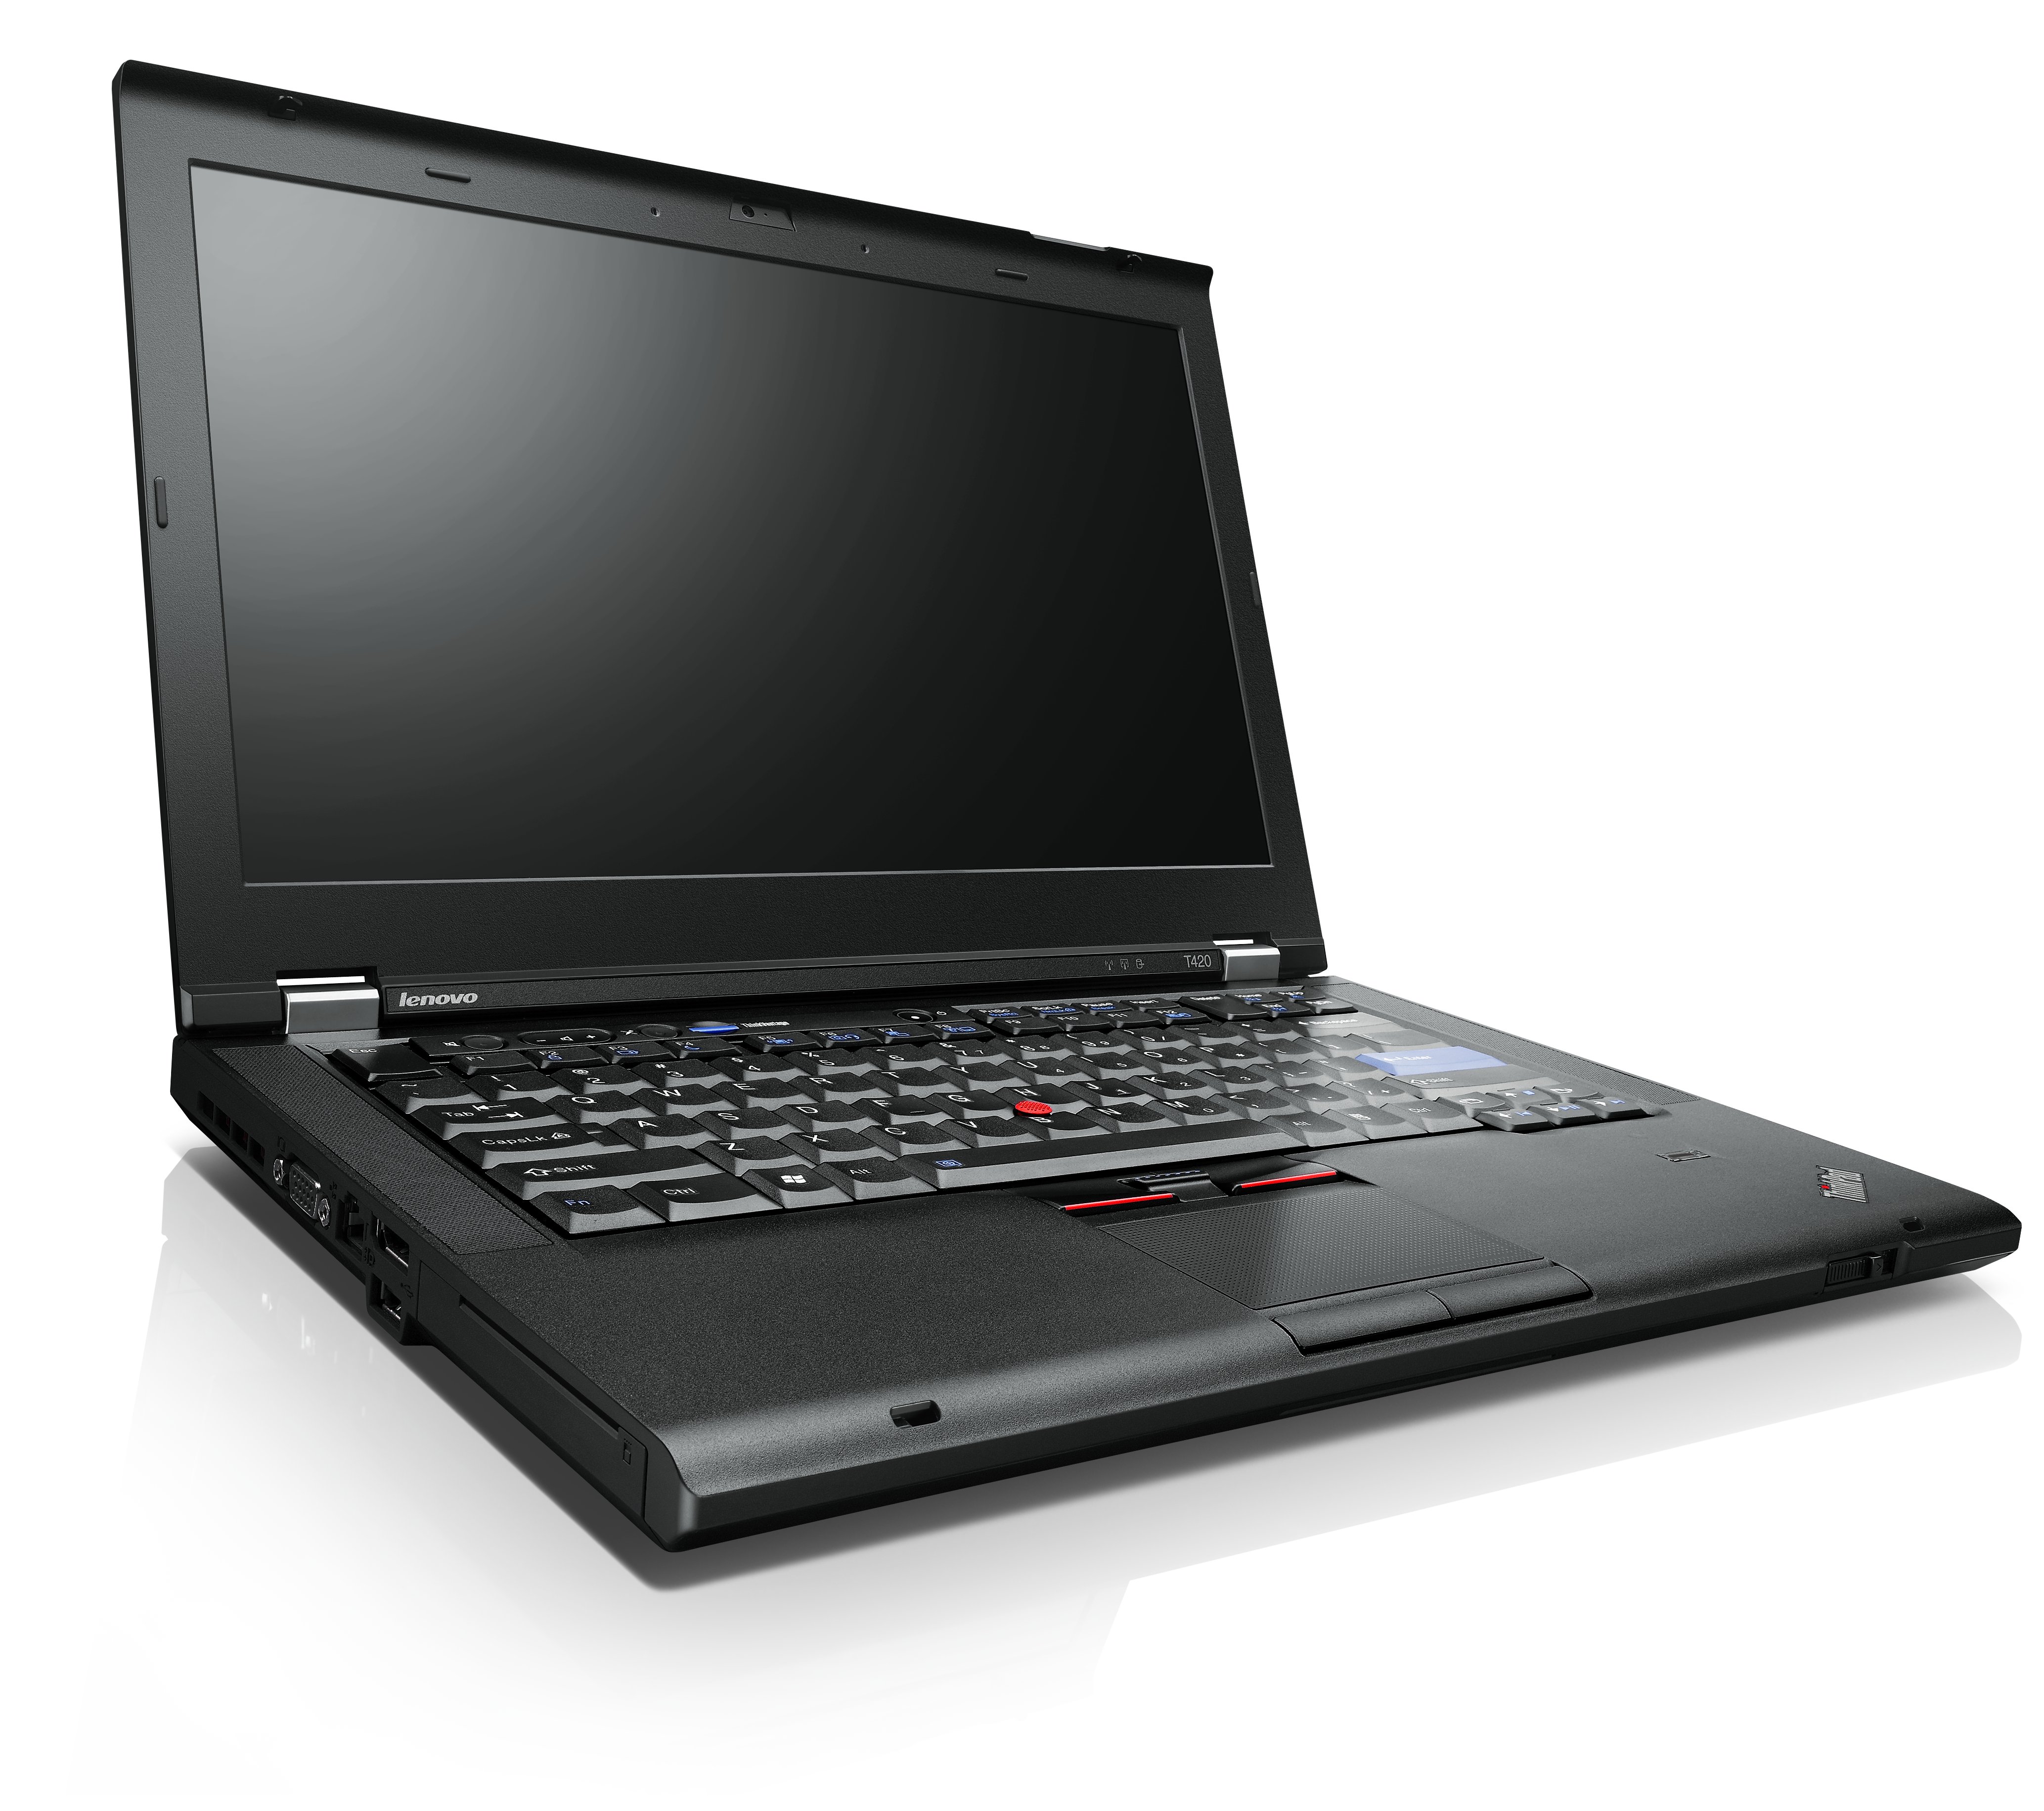  Lenovo  ThinkPad T420  Details Specs and Photos